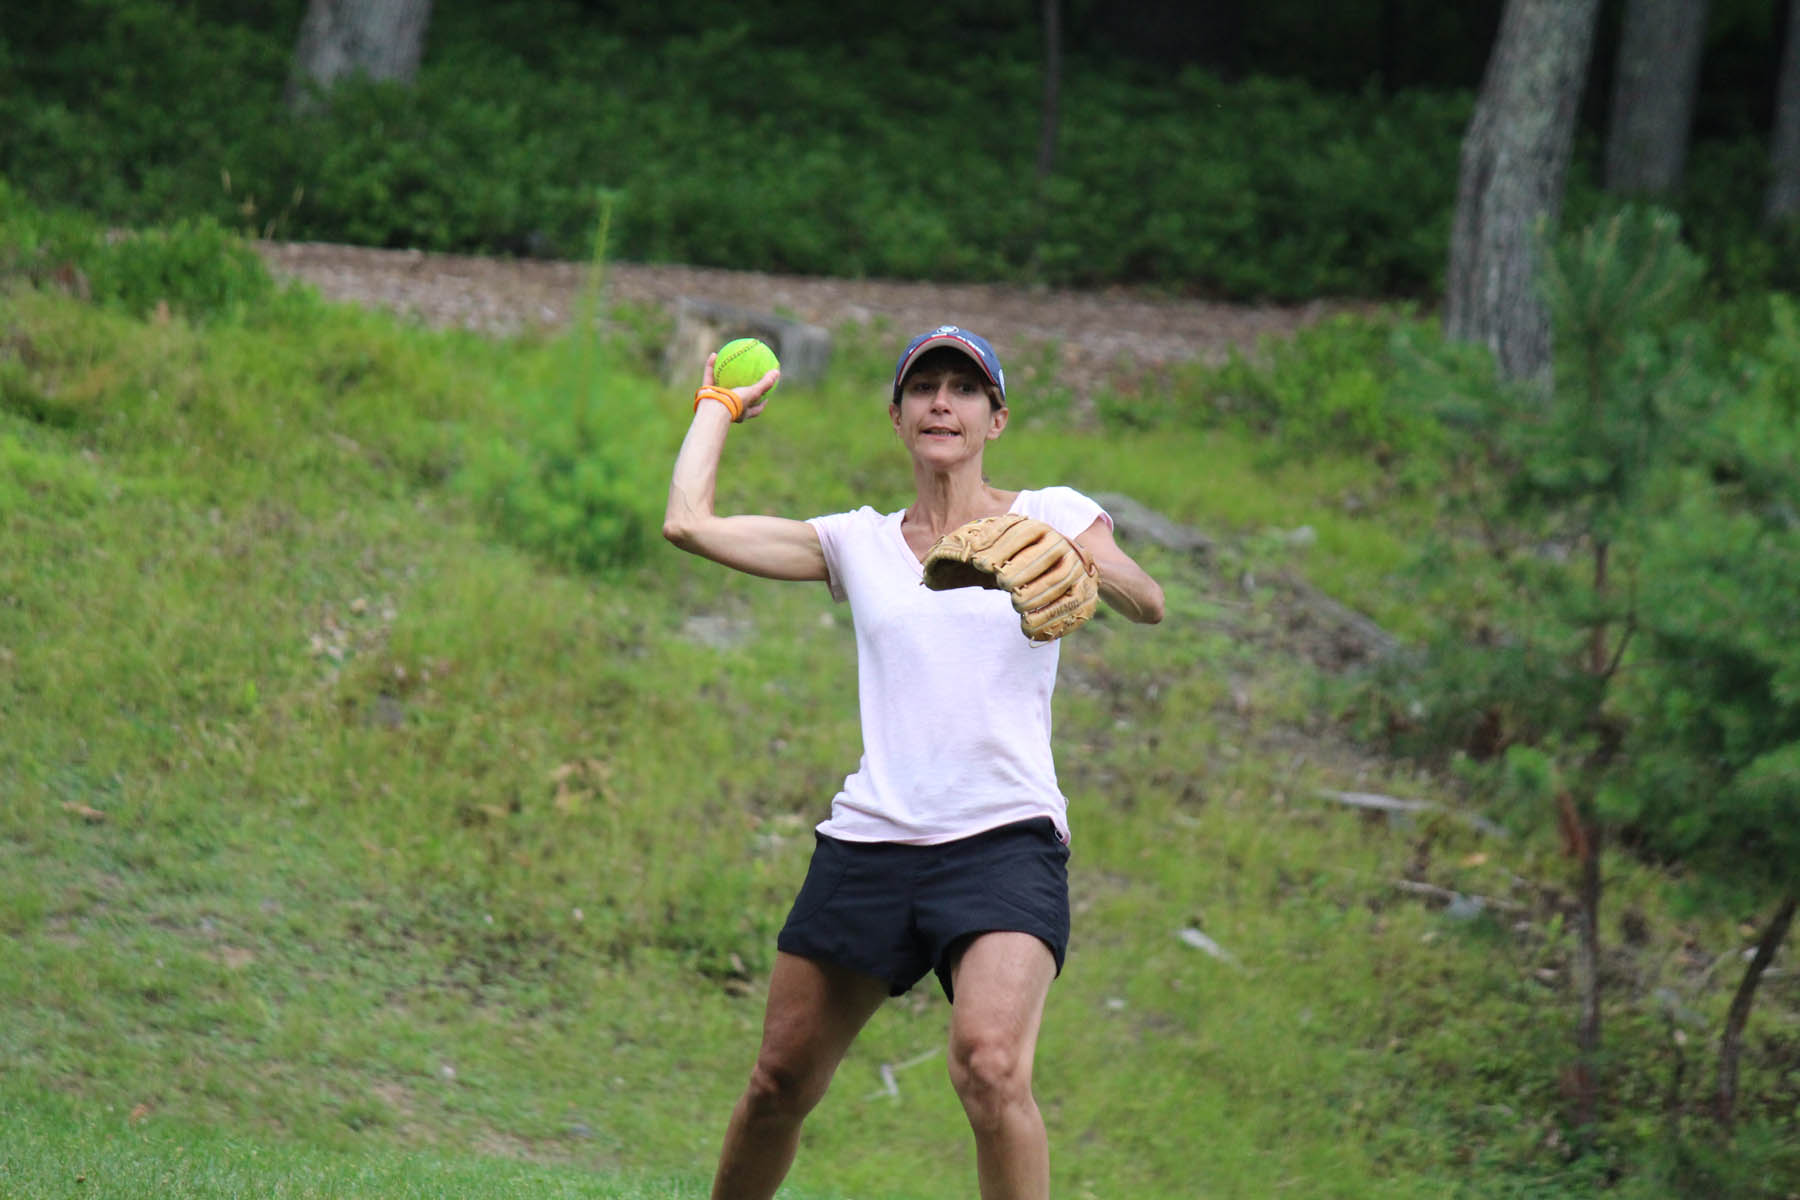 Woman throwing a tennis ball.